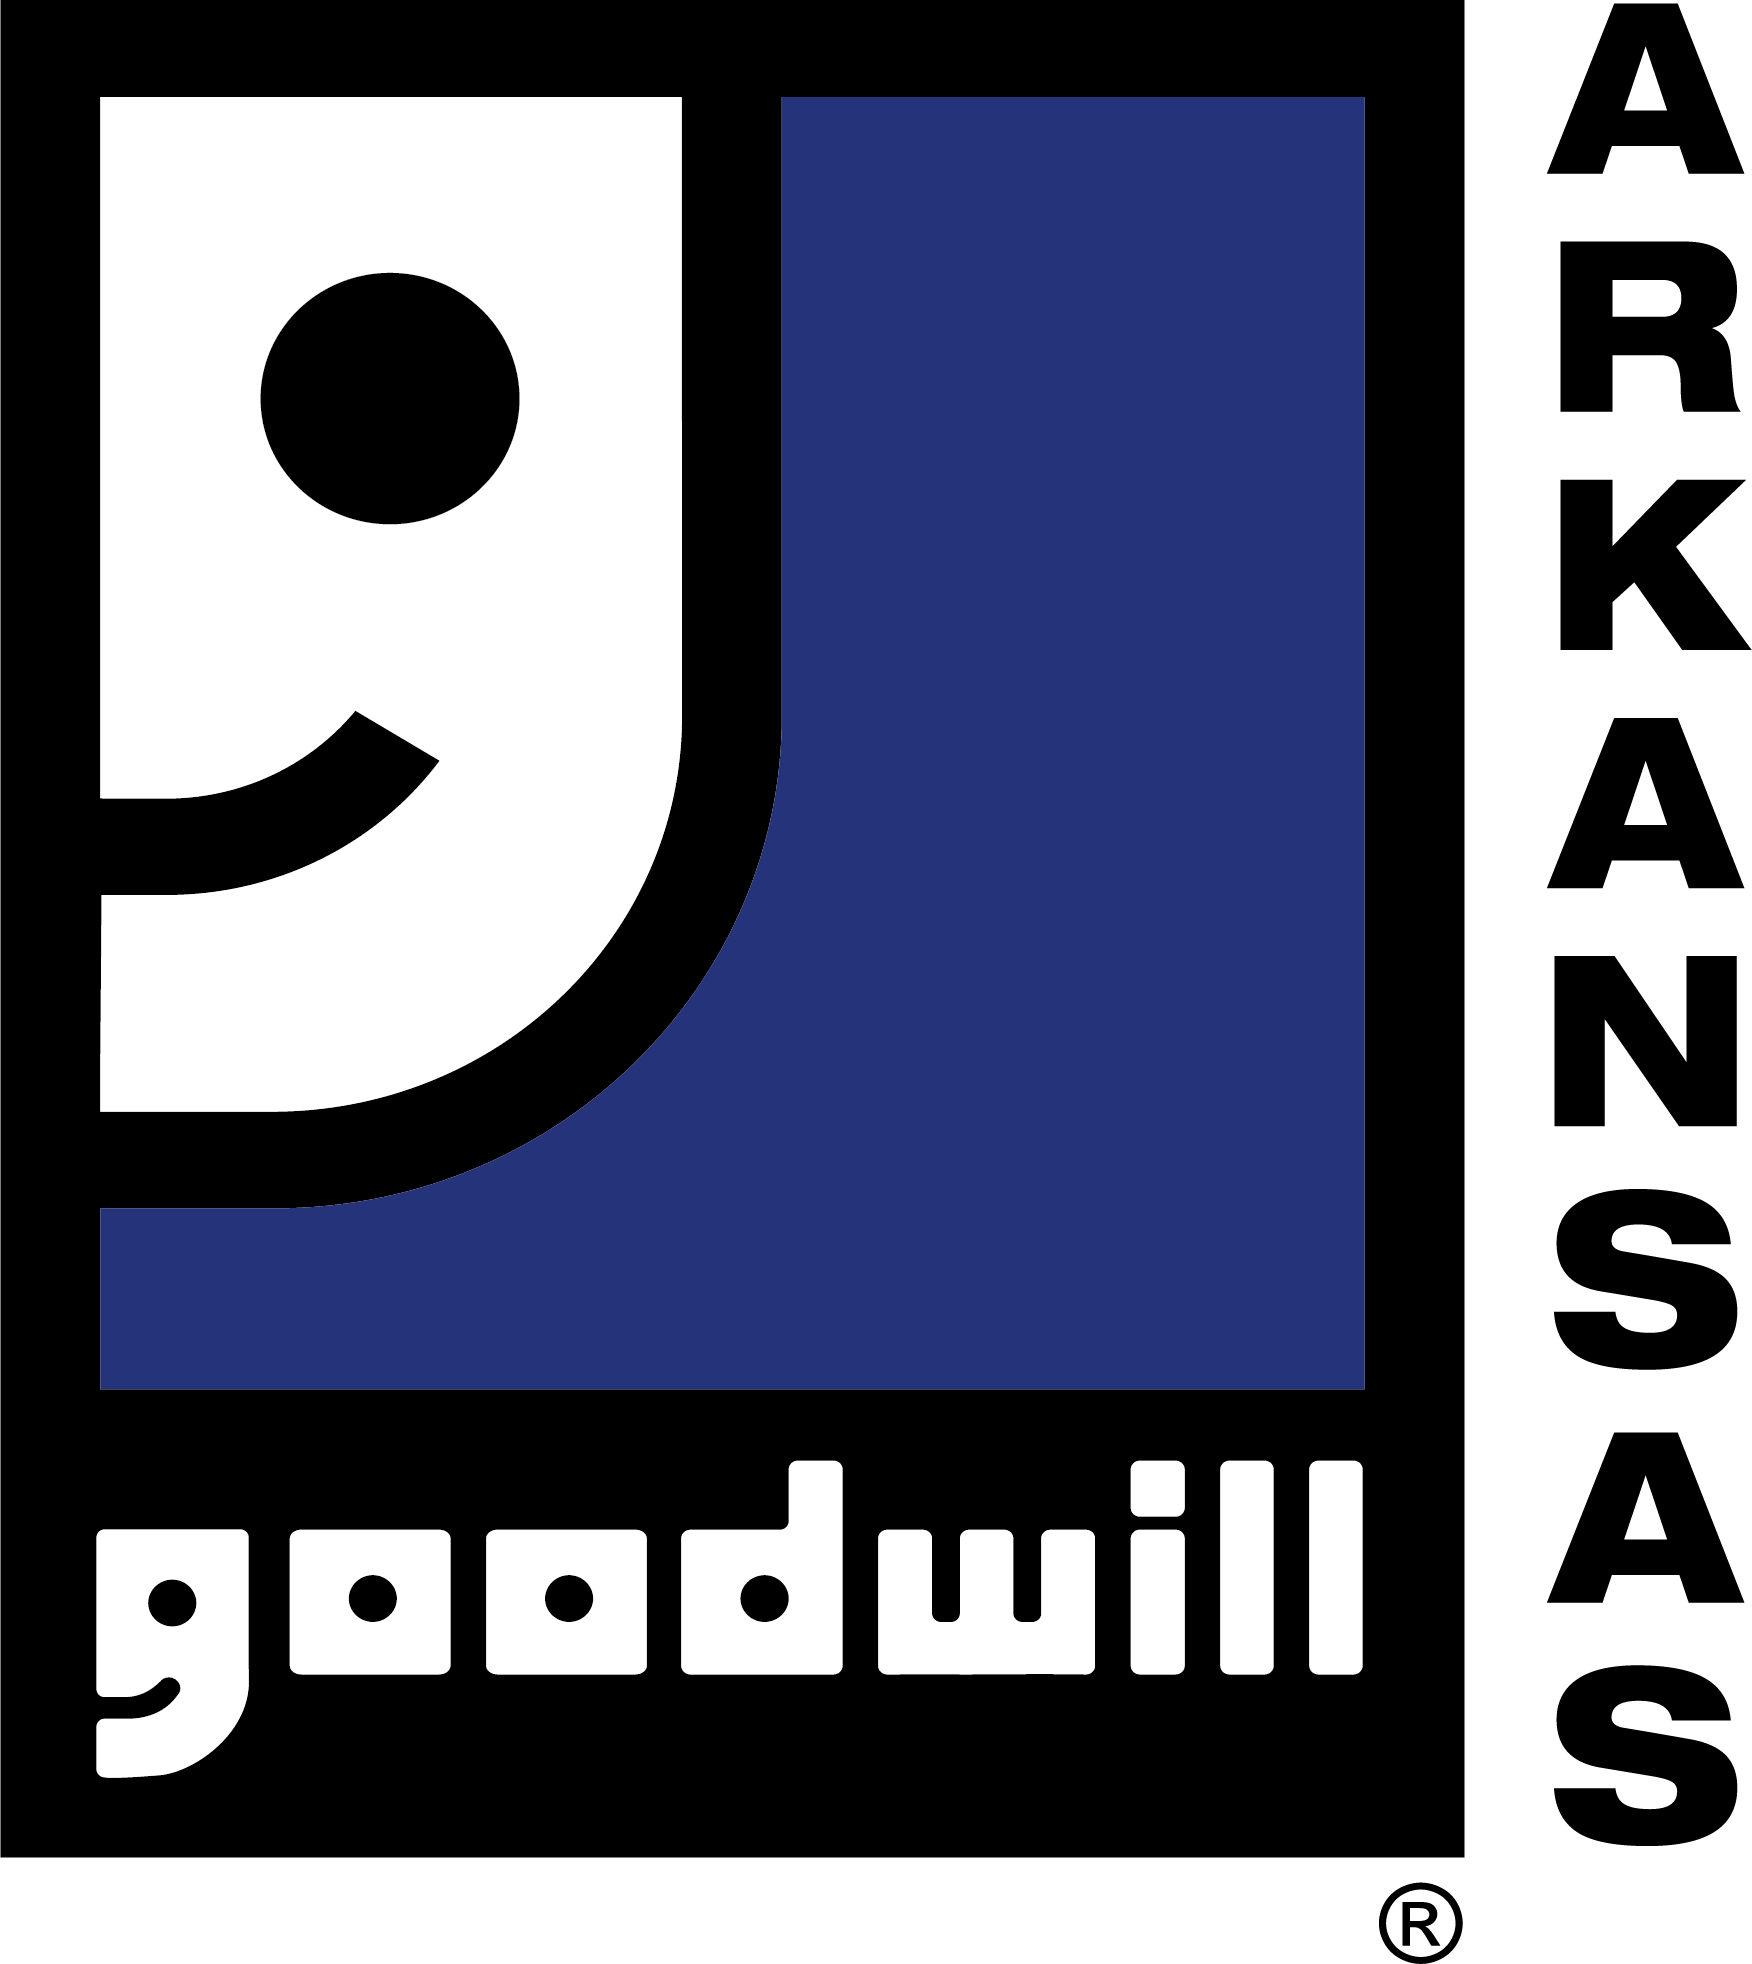 Goodwill Industries of Arkansas, Inc. Logo